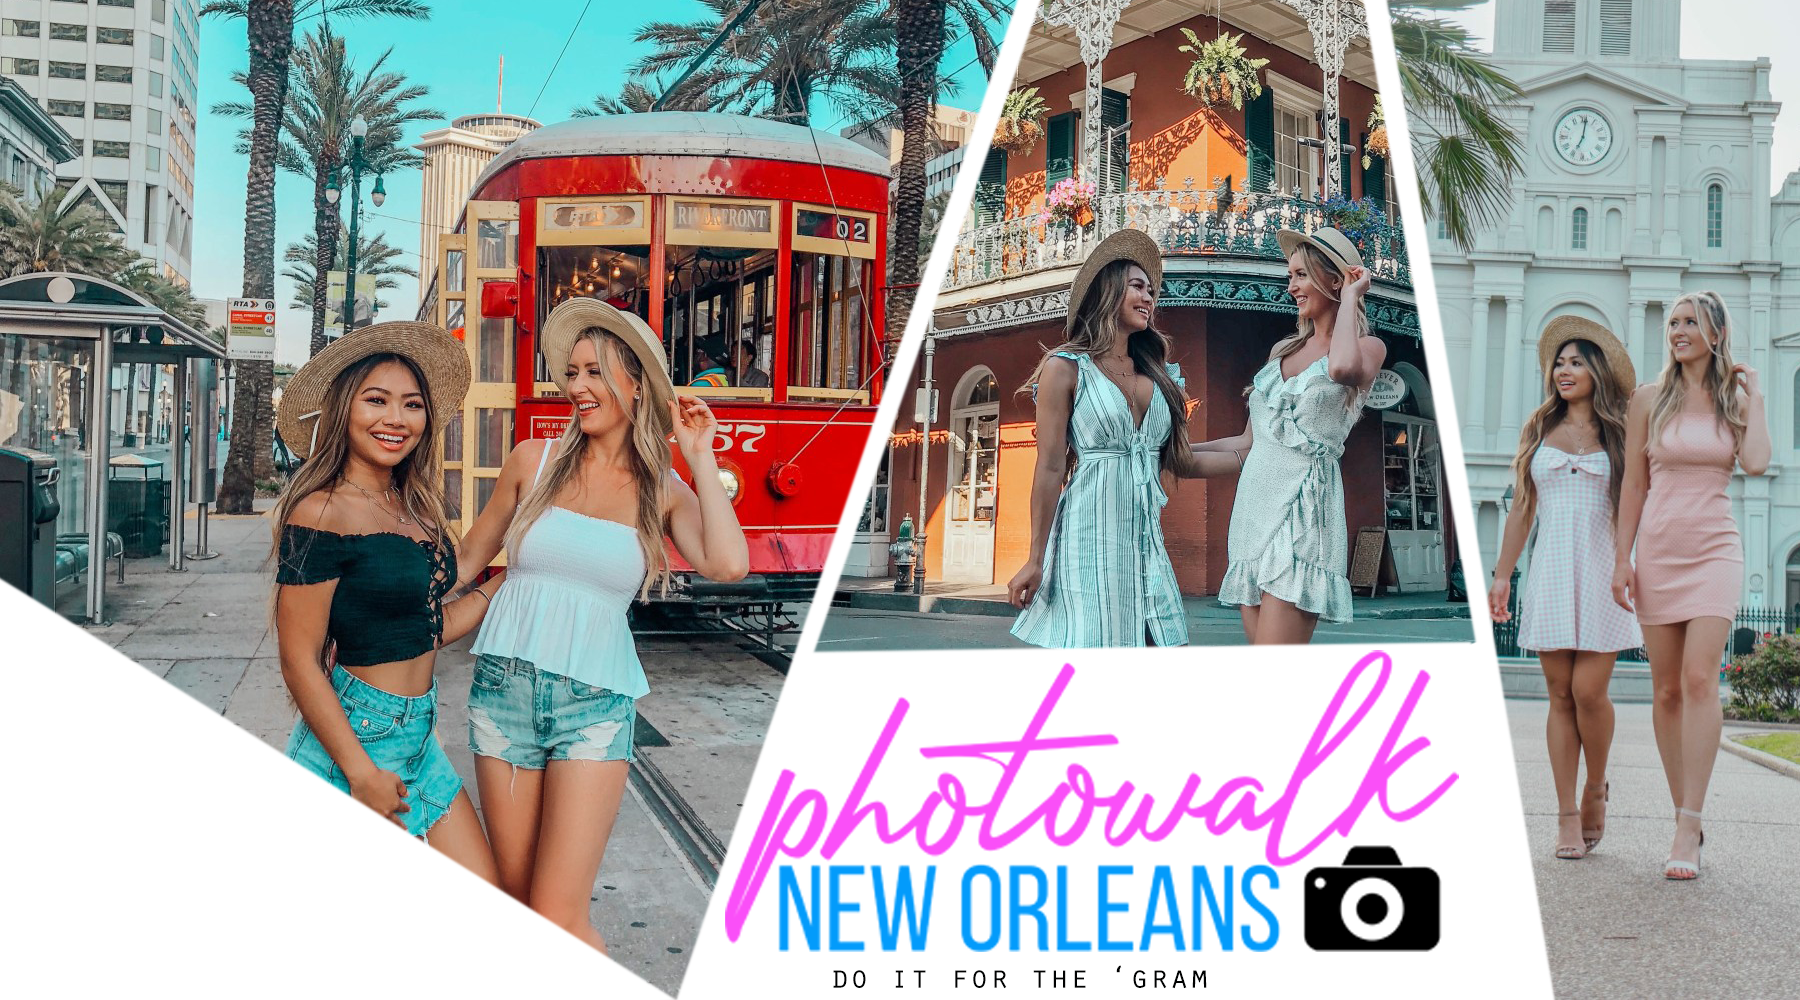 Photowalk New Orleans - Instagram Photo Tour